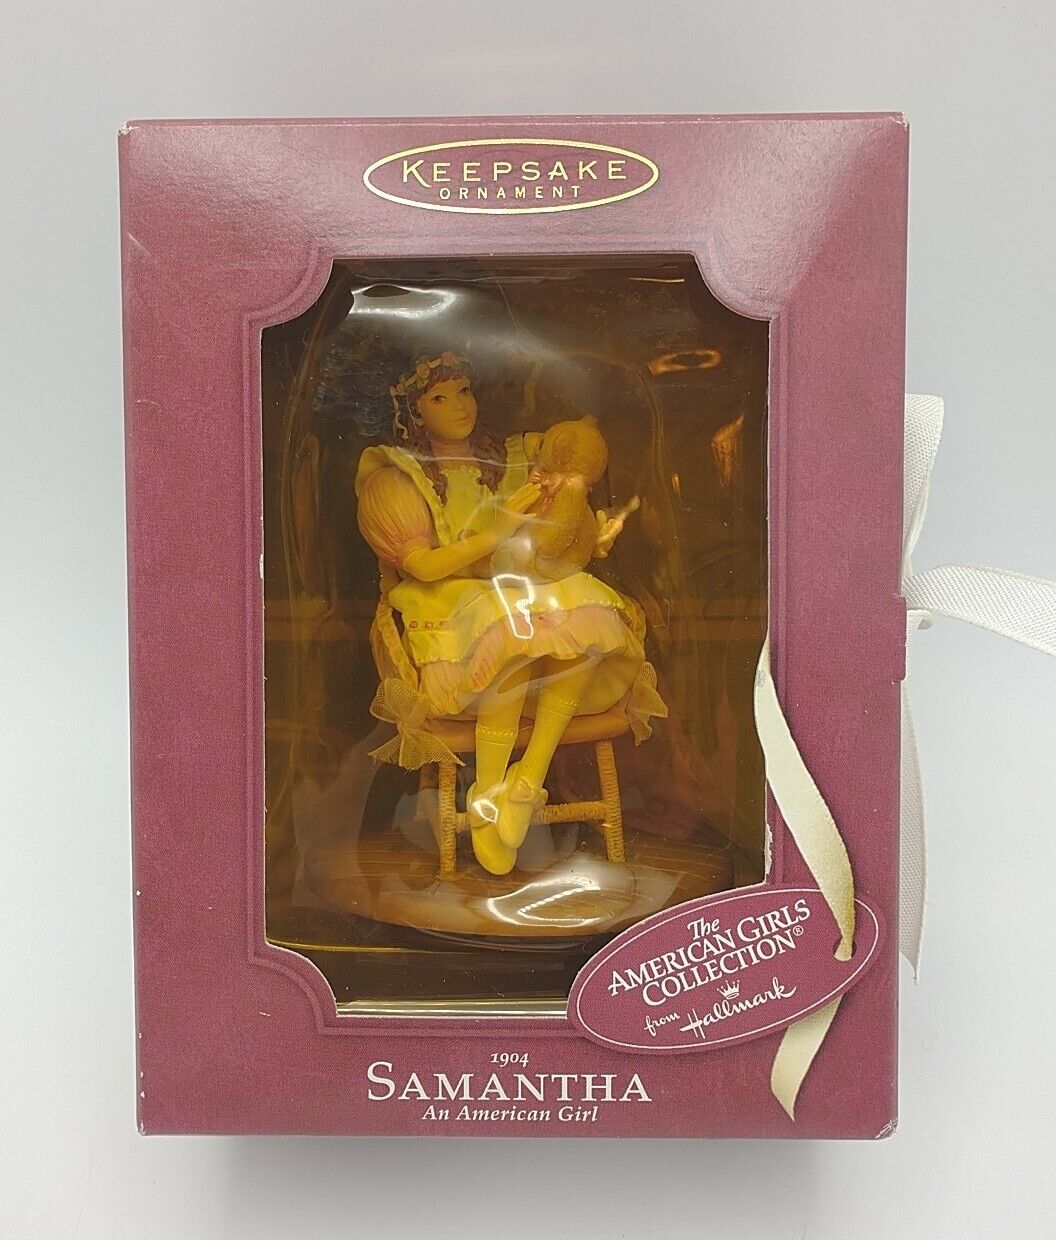 Vintage American Girl Collection Samantha 2003 Hallmark Ornament Keepsake NOS